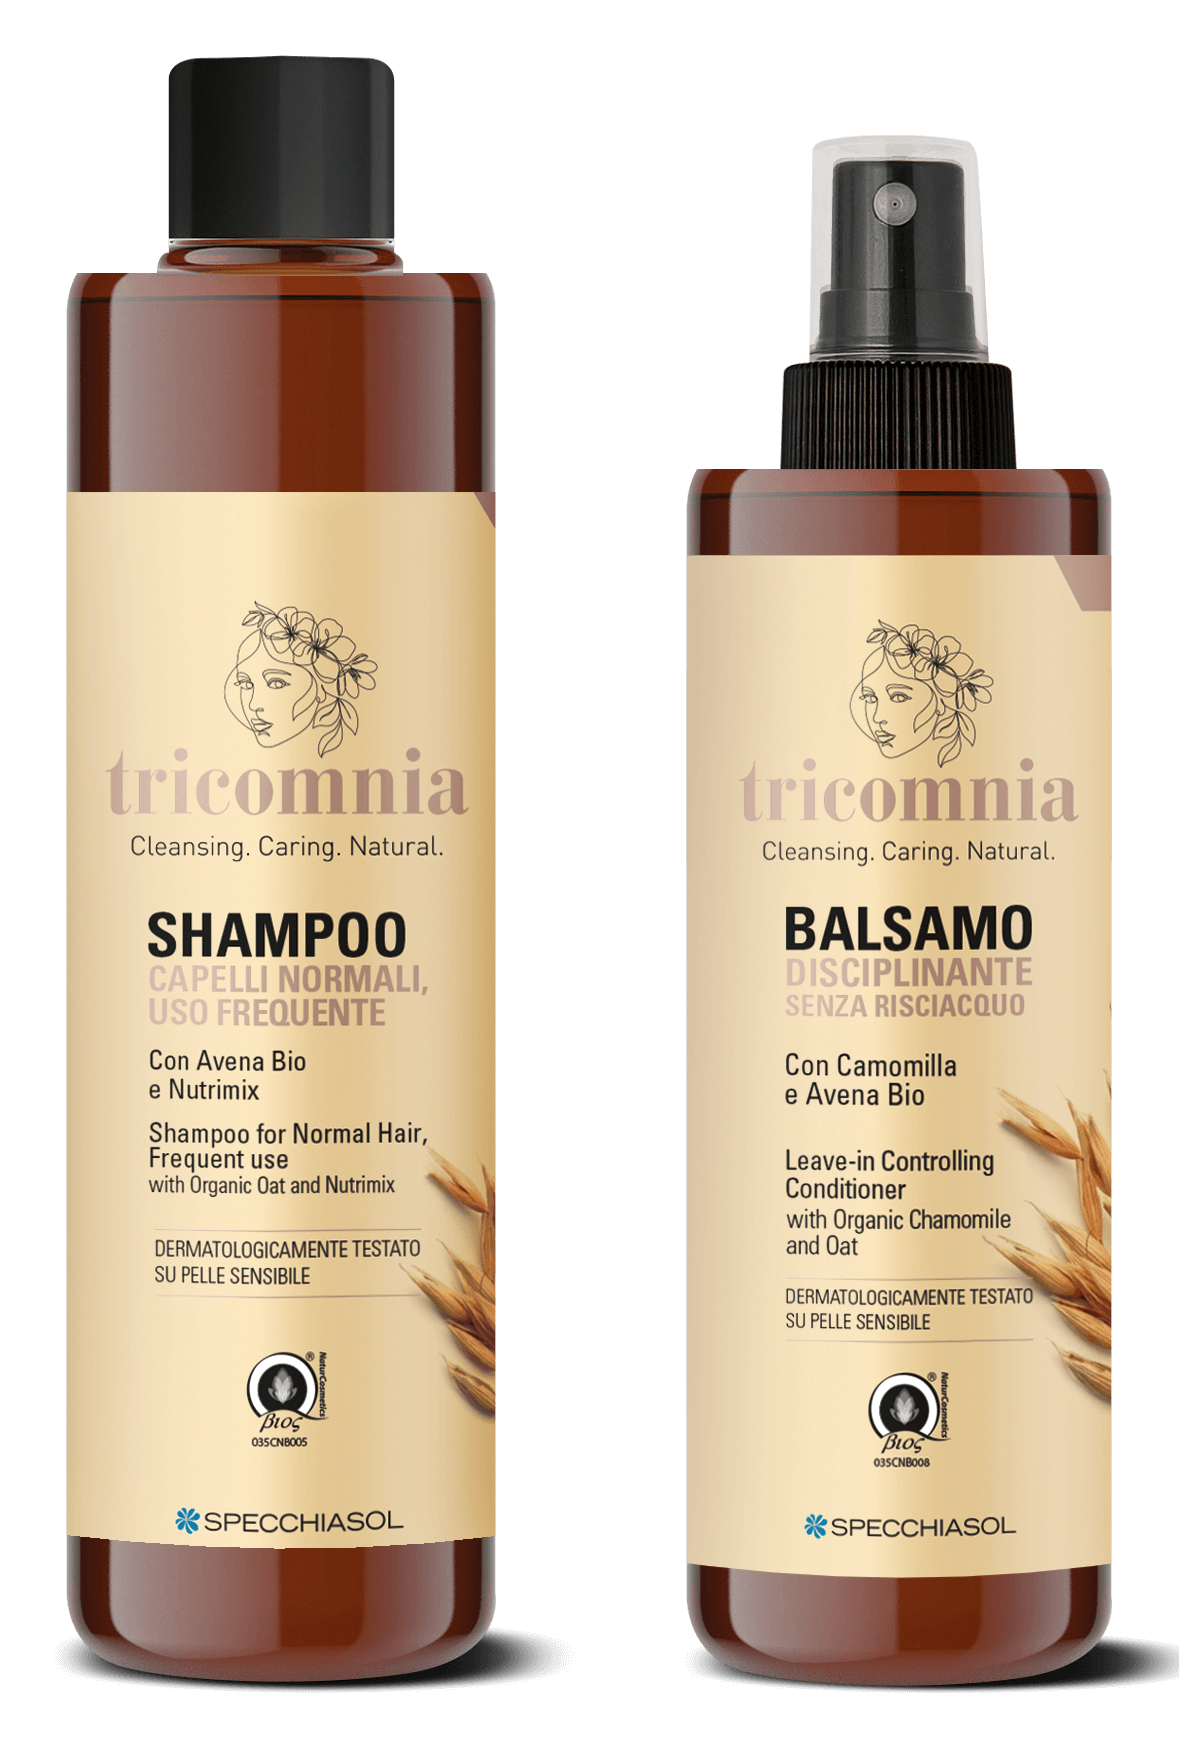 Tricomnia Shampoo e Balsamo bottles